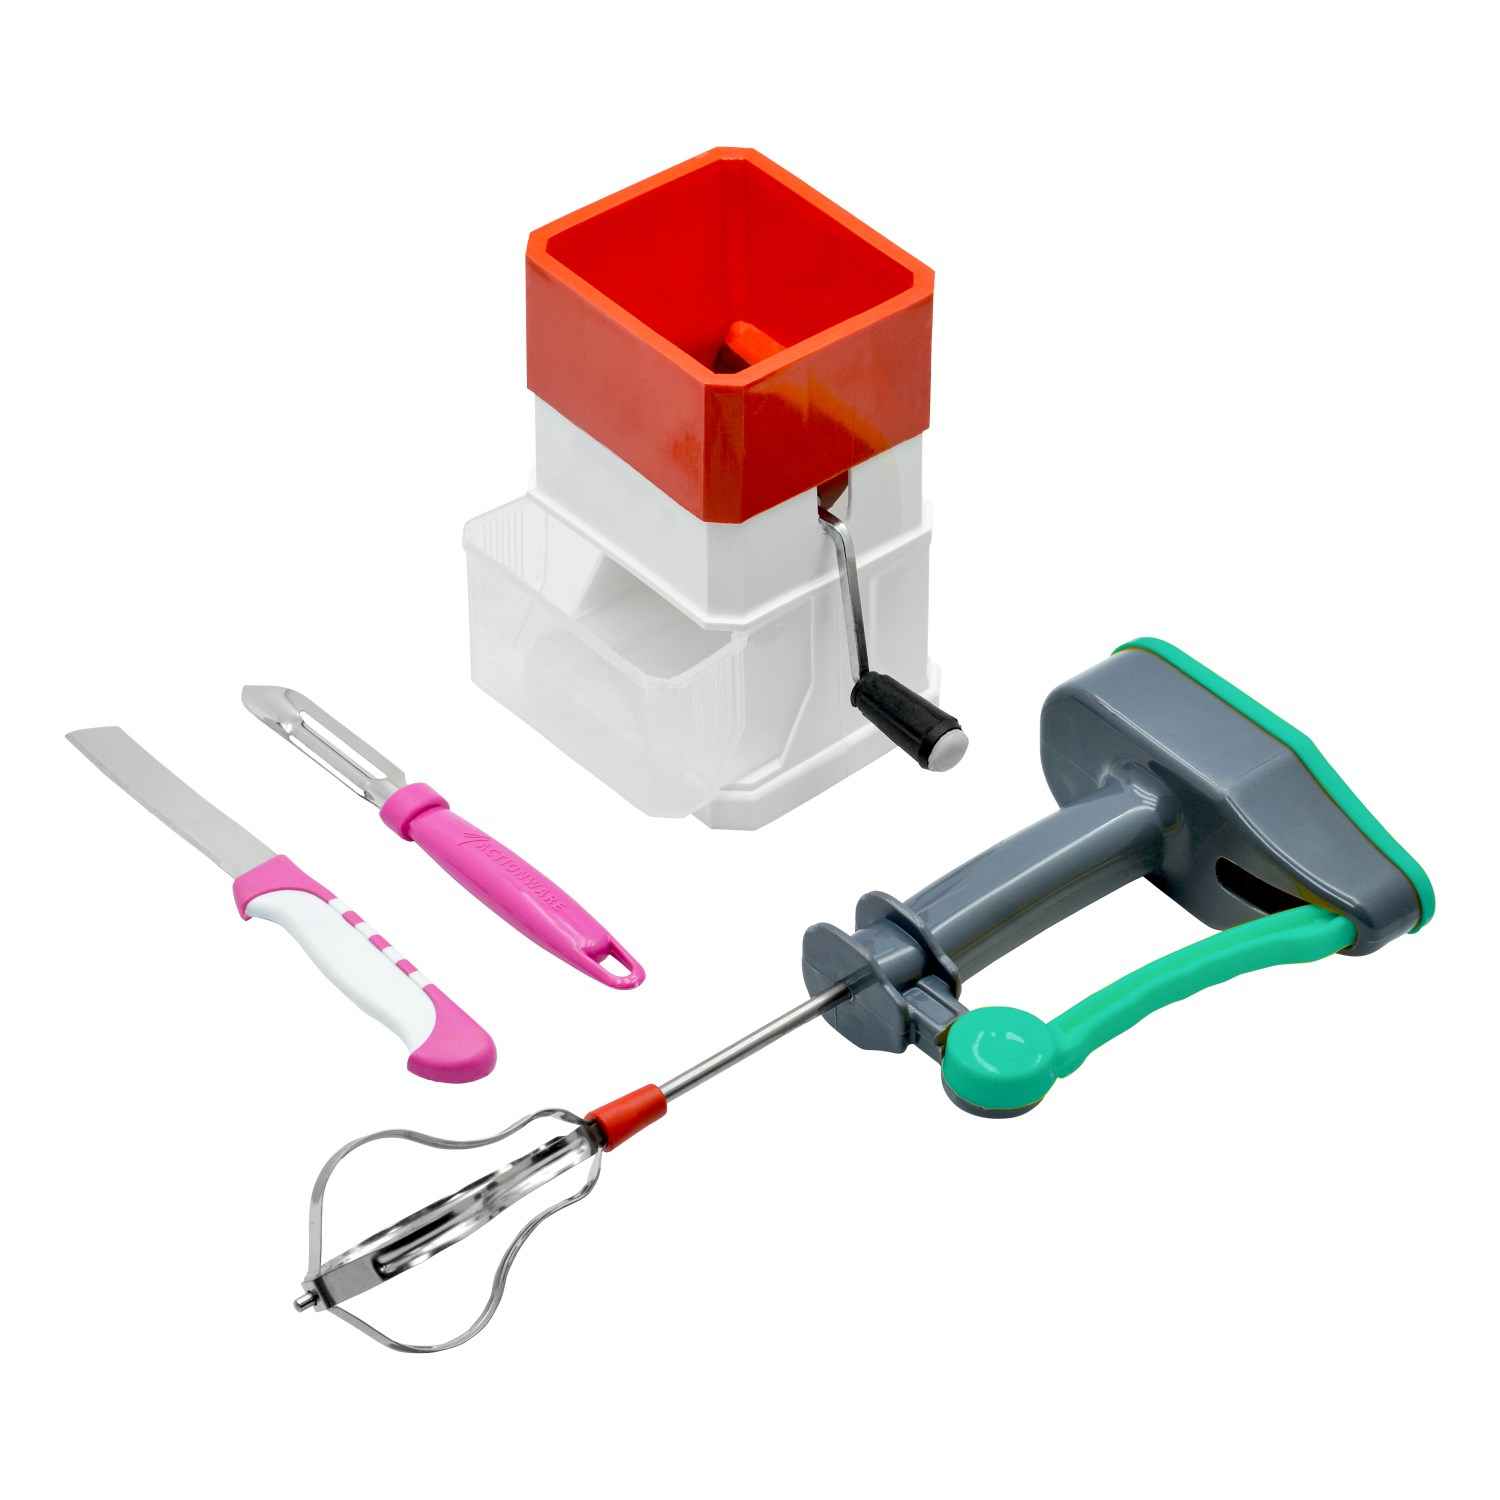 Action Kitchen Tool Accessories Gadget Set (Set Of 4)